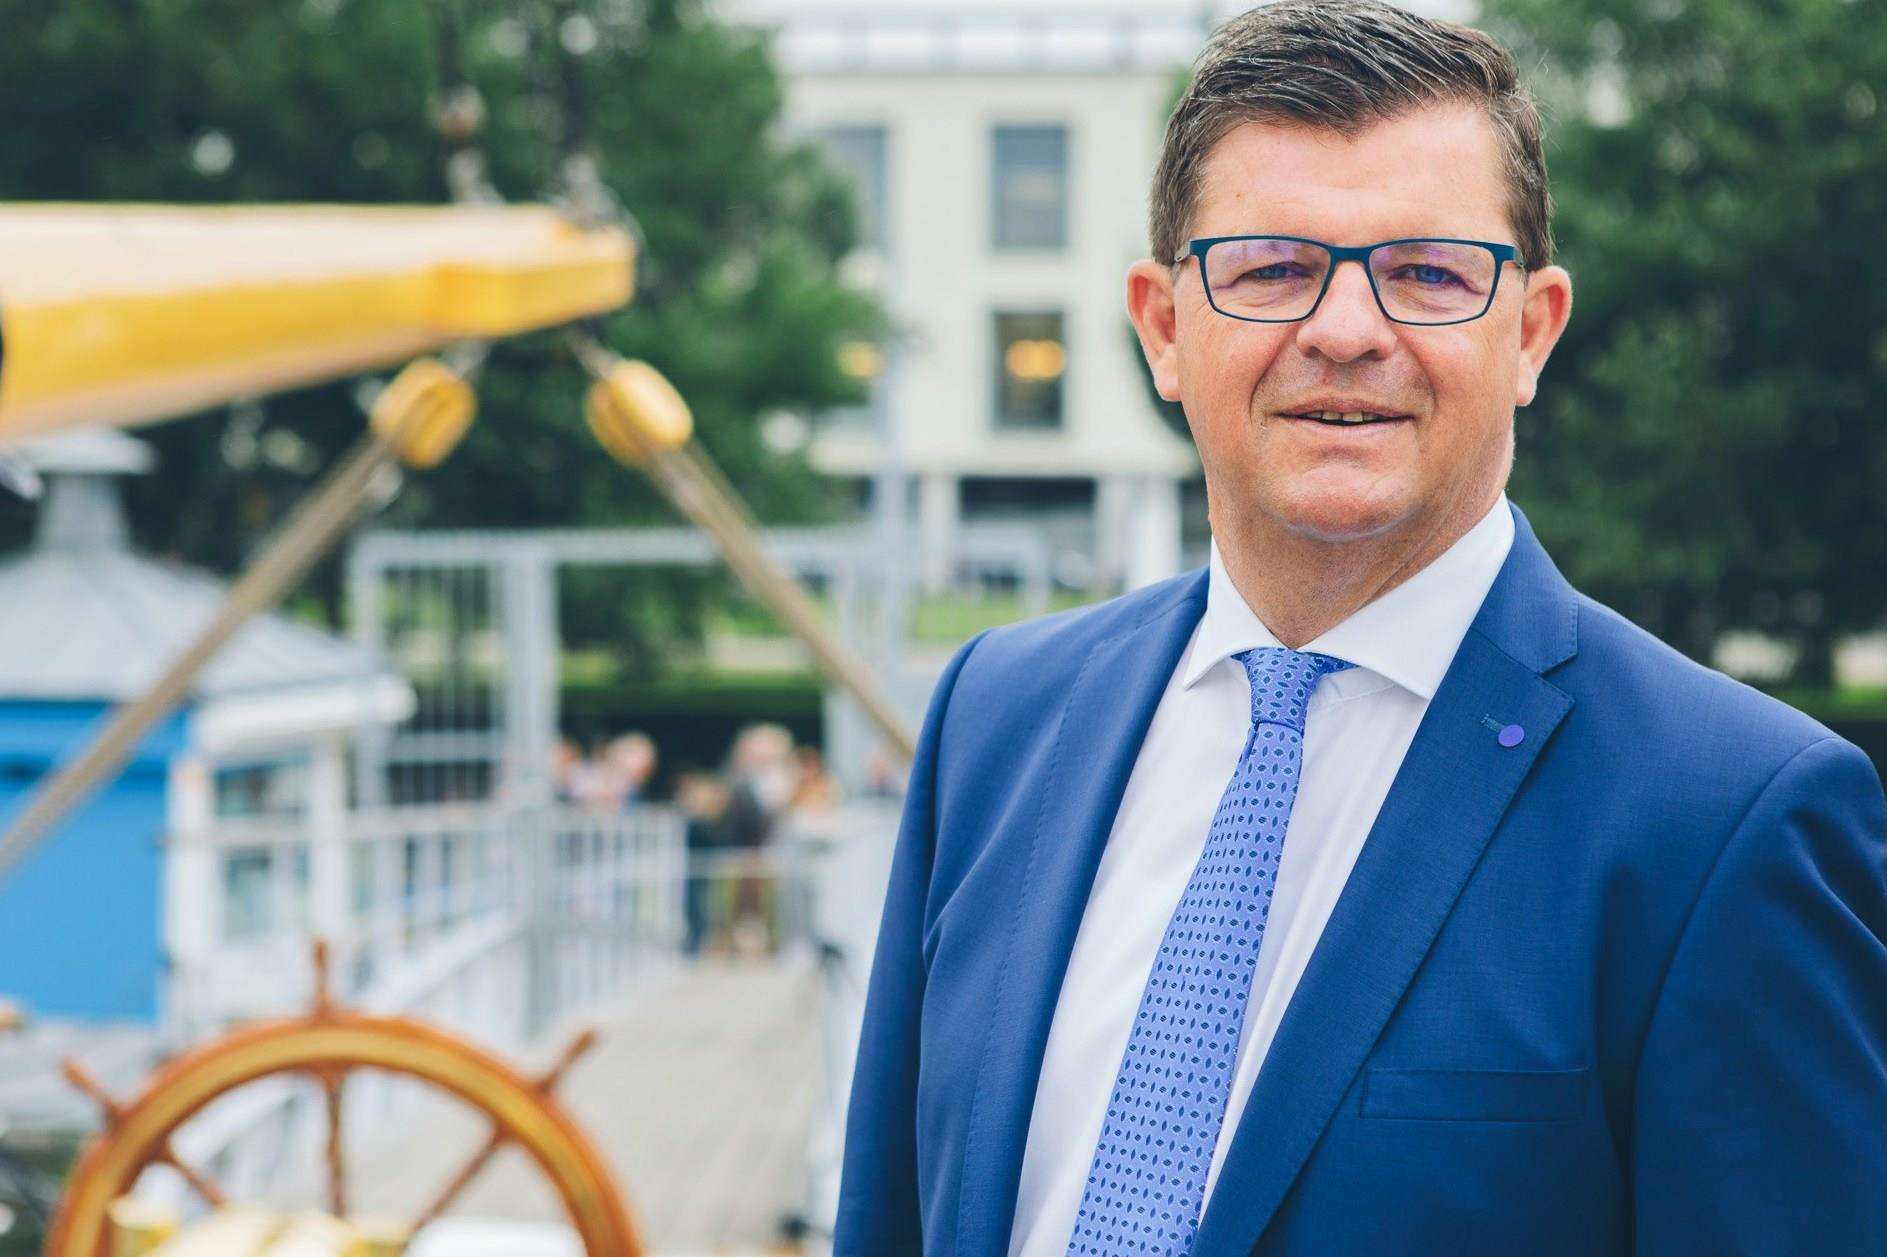 Mayor of Ostend Bart Tommelien